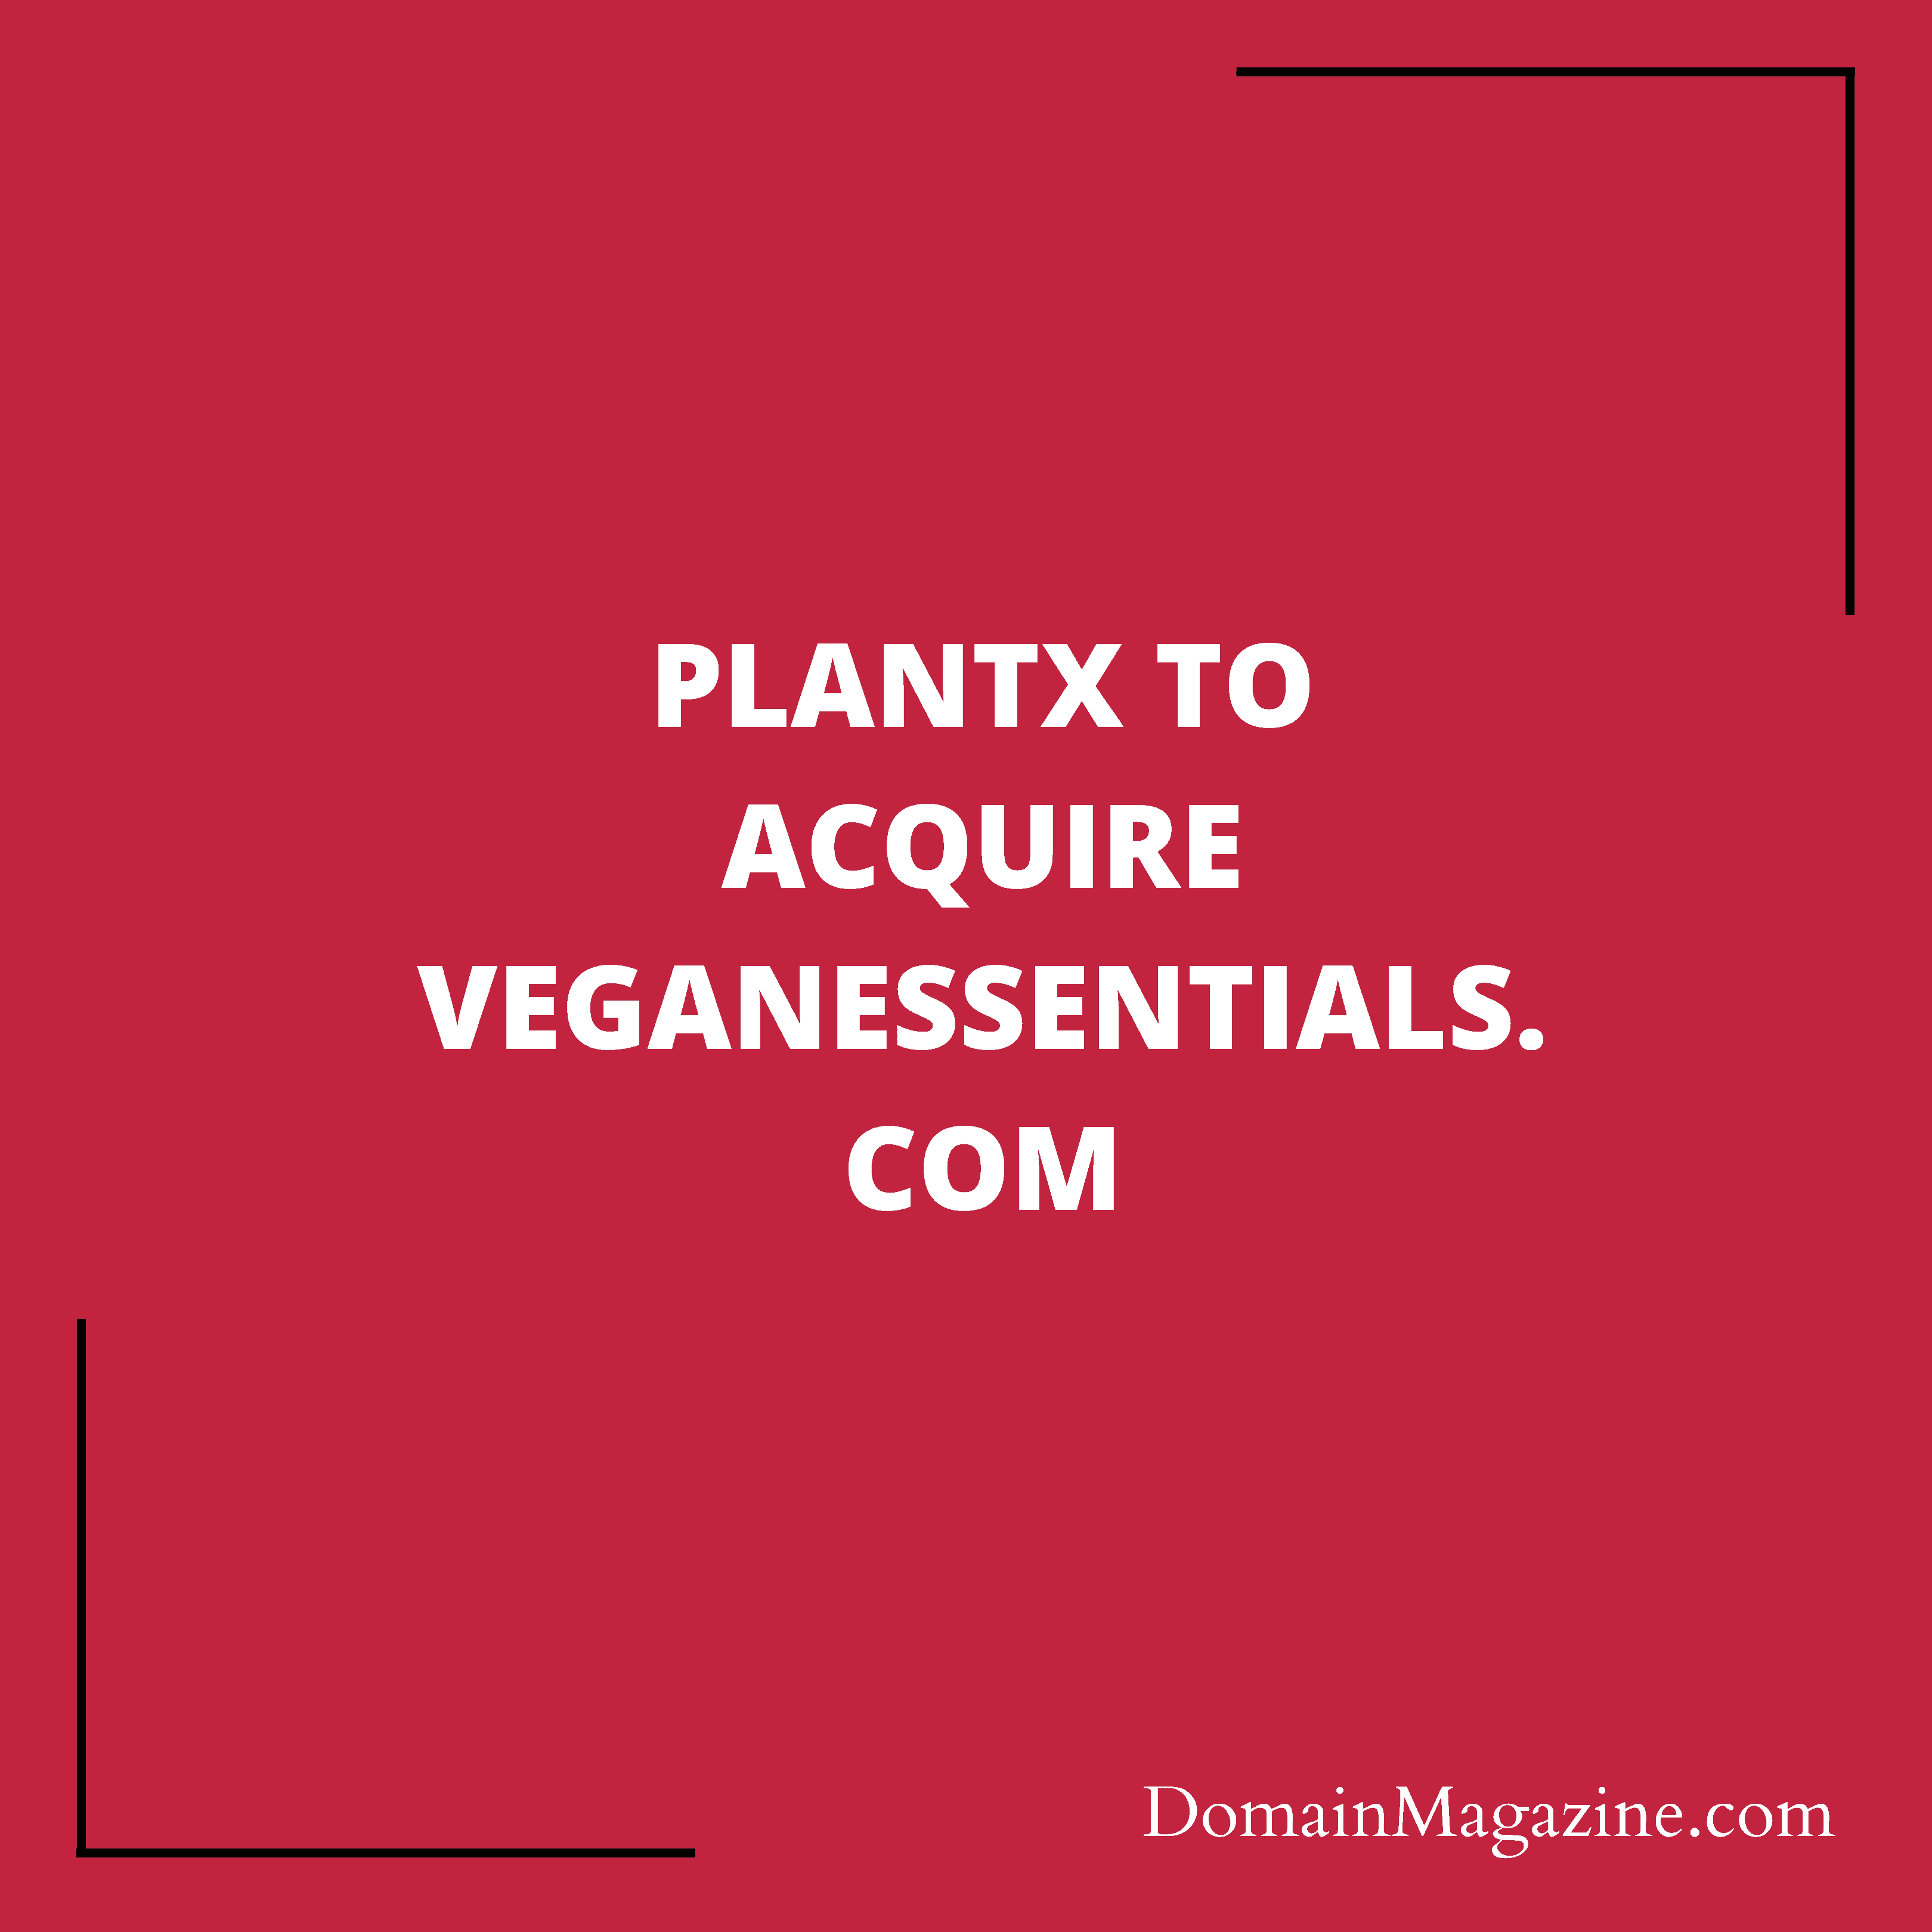 PlantX to acquire VeganEssentials.com